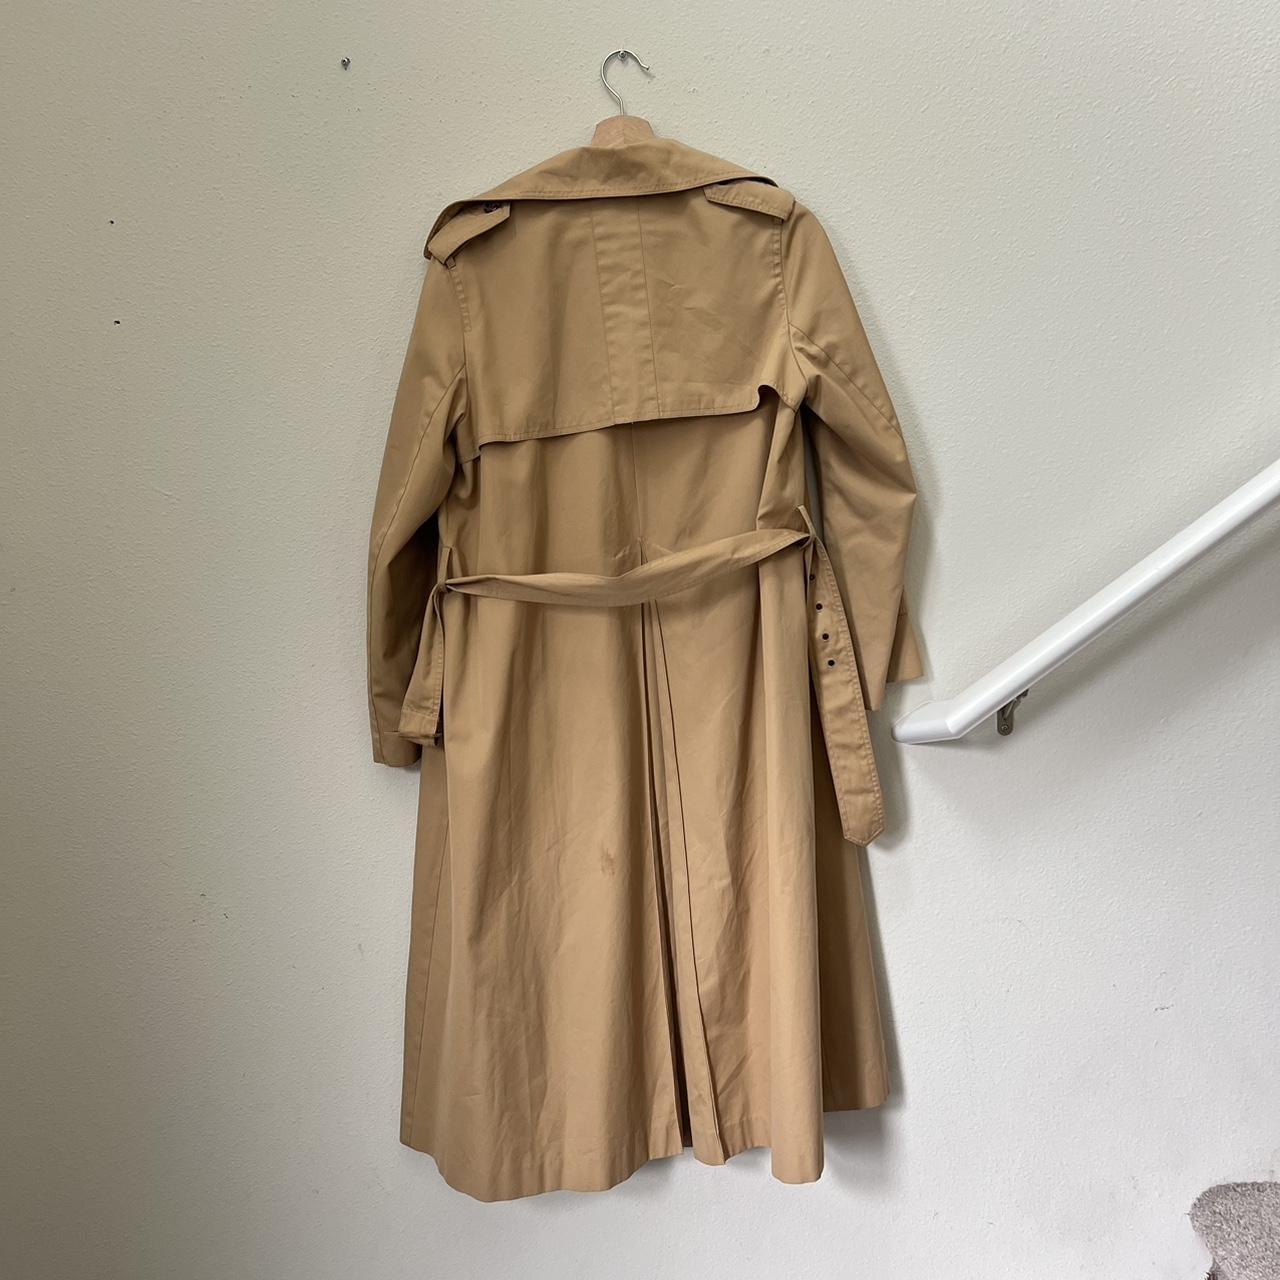 vintage trench coat size XS-M, depending on desired... - Depop